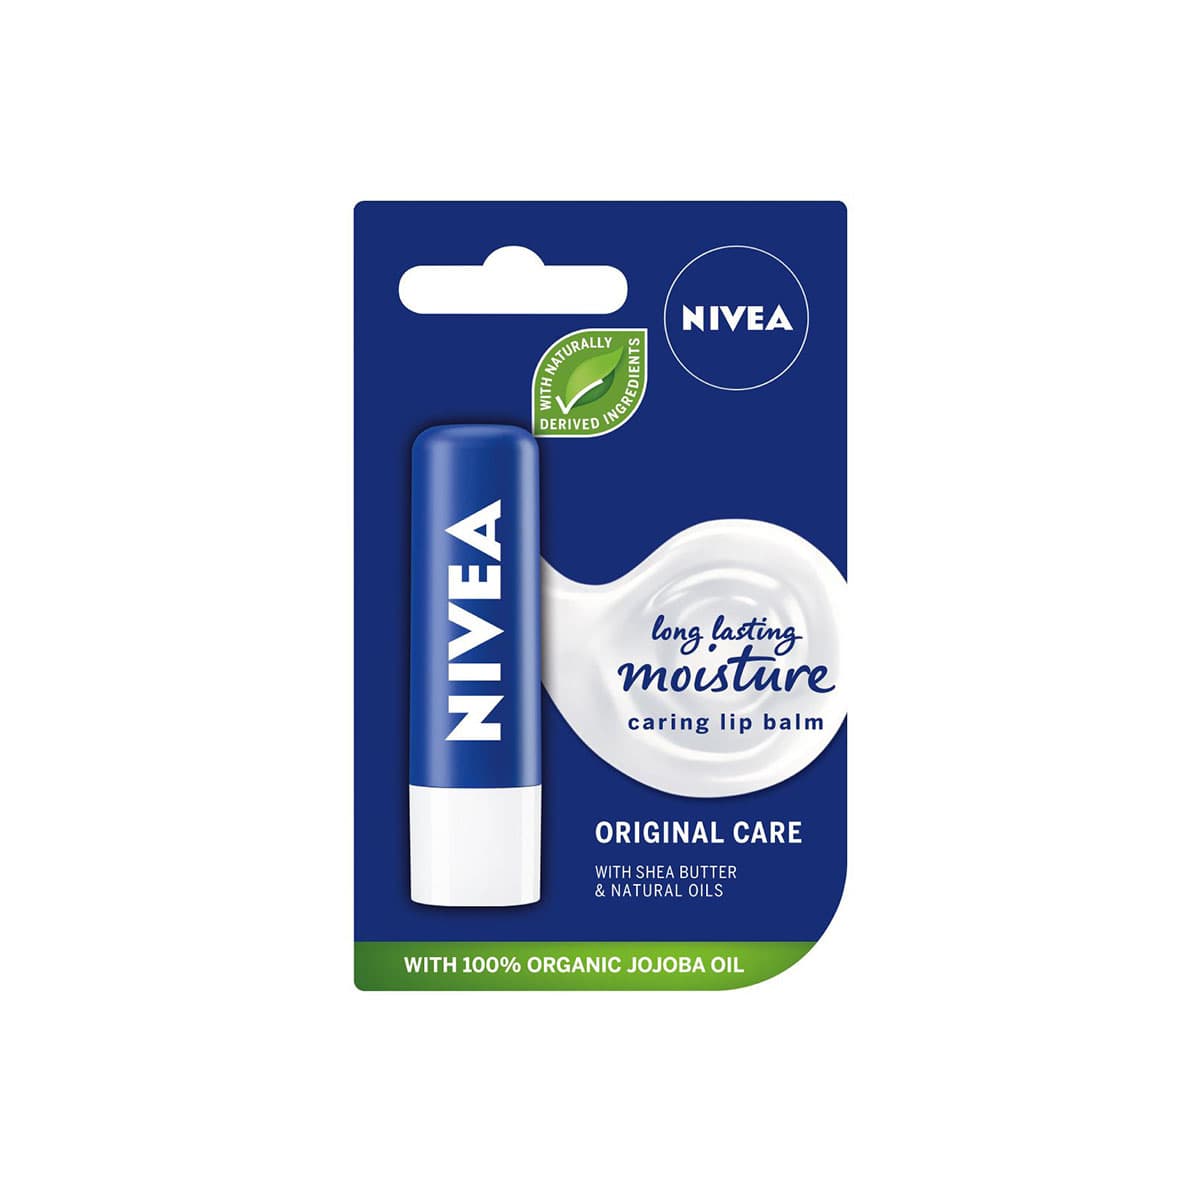 Nivea Long Lasting Moisture Caring lip Balm(Orginal Care)Beiersdorf UK Ltd